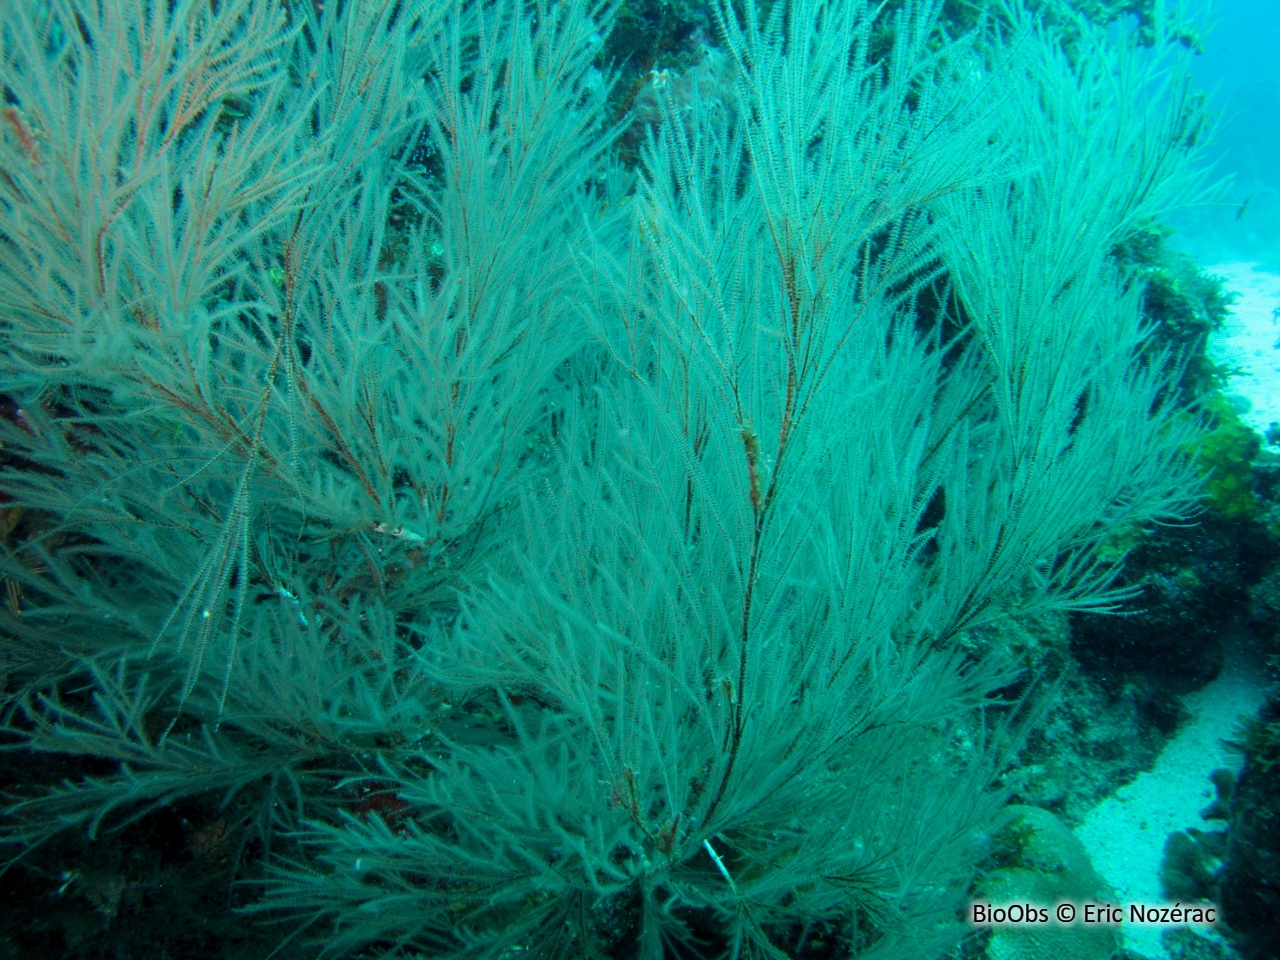 Corail noir plumeux - Plumapathes pennacea - Eric Nozérac - BioObs